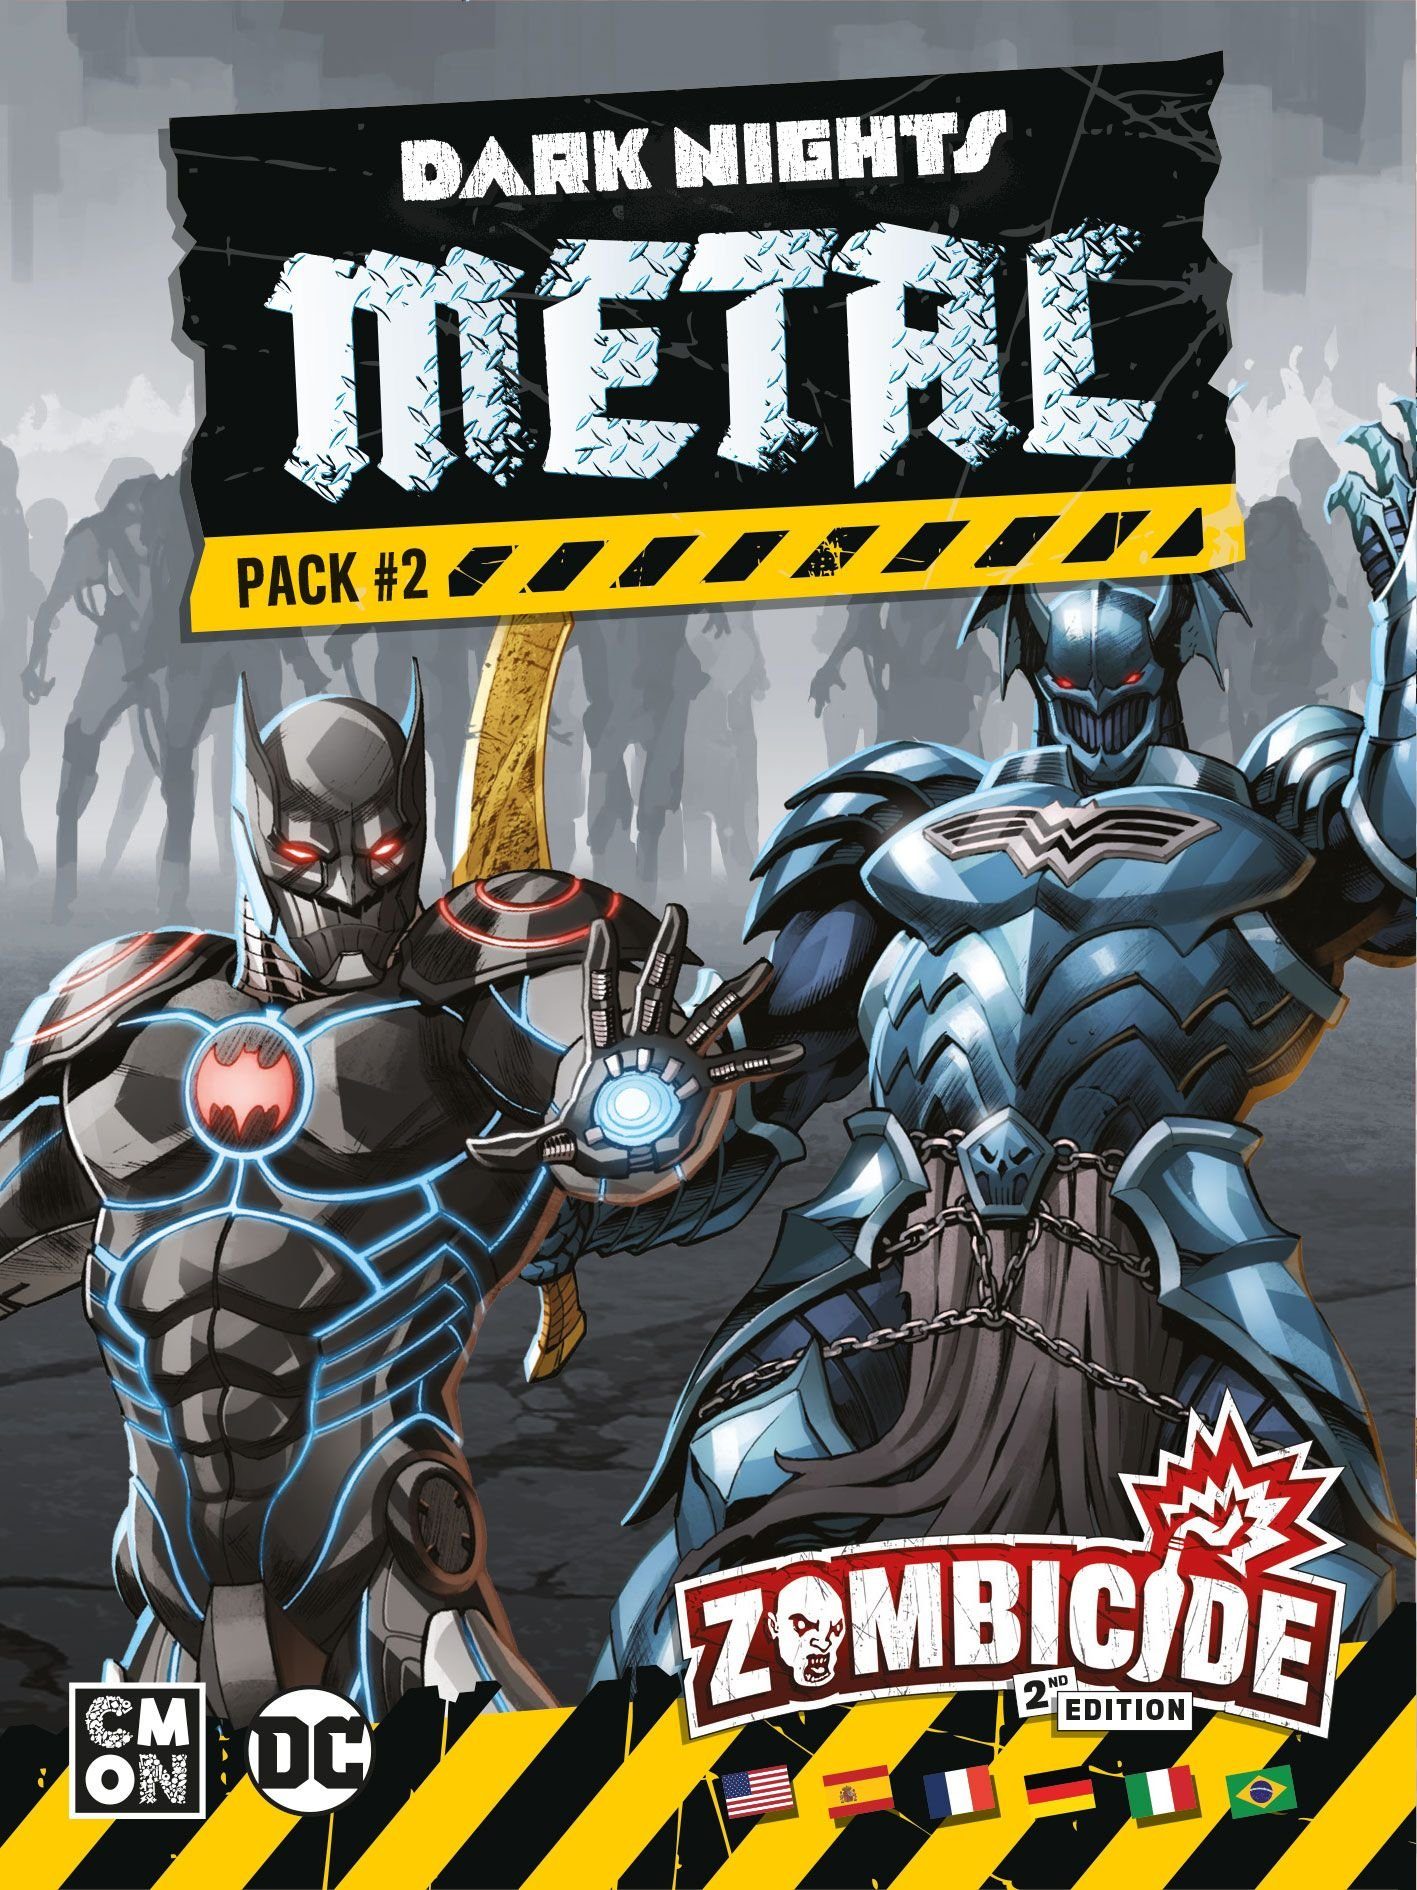 CoolMiniOrNot Spiel, CMON - Zombicide 2. Edition - Dark Nights Metal Pack 2 CMON - Zombicide 2. Edition - Dark Nights Metal Pack 2